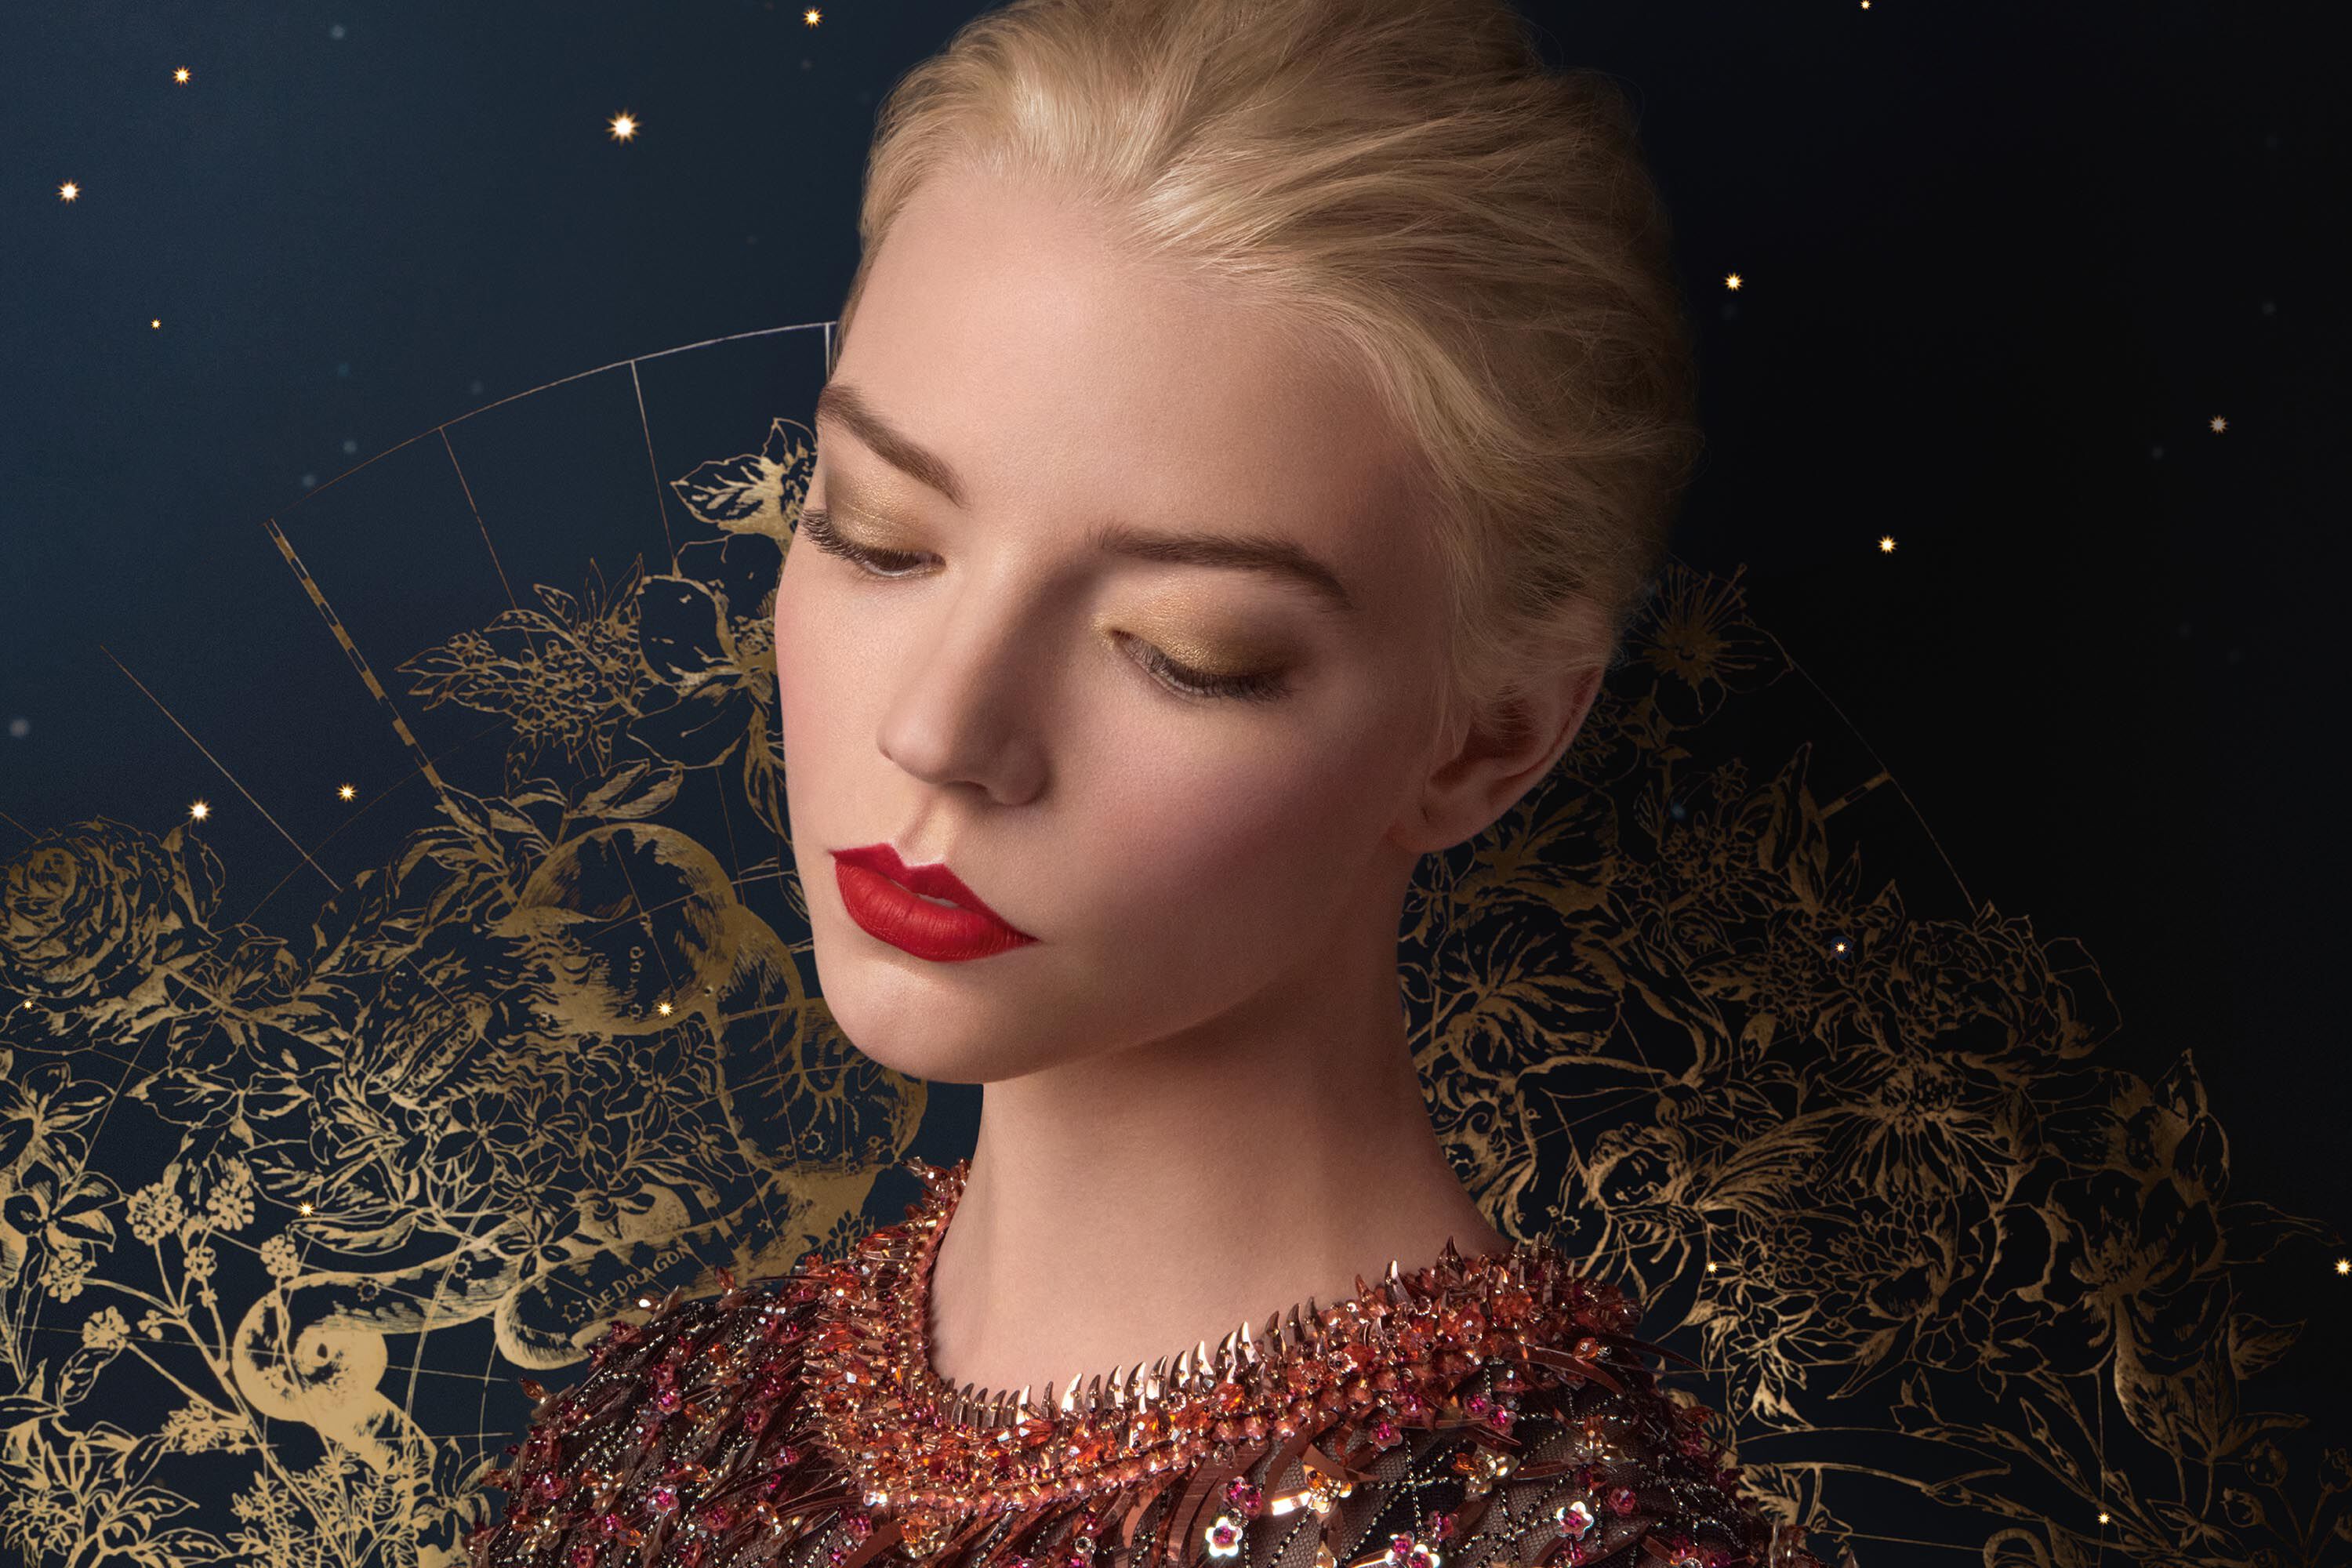 Make the Holiday Season Magical with Dior